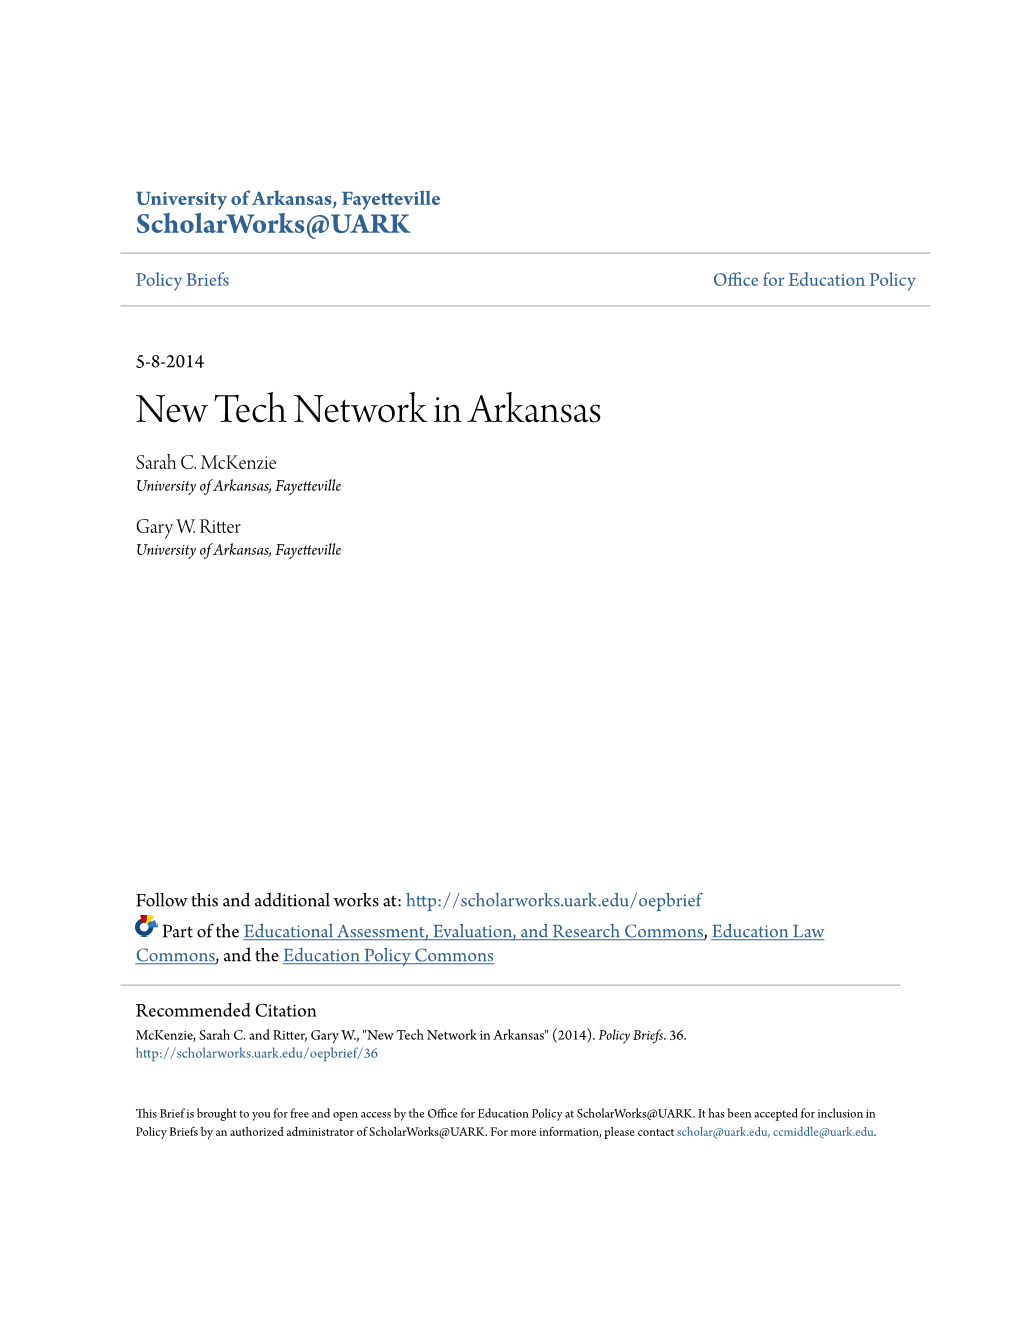 New Tech Network in Arkansas Sarah C